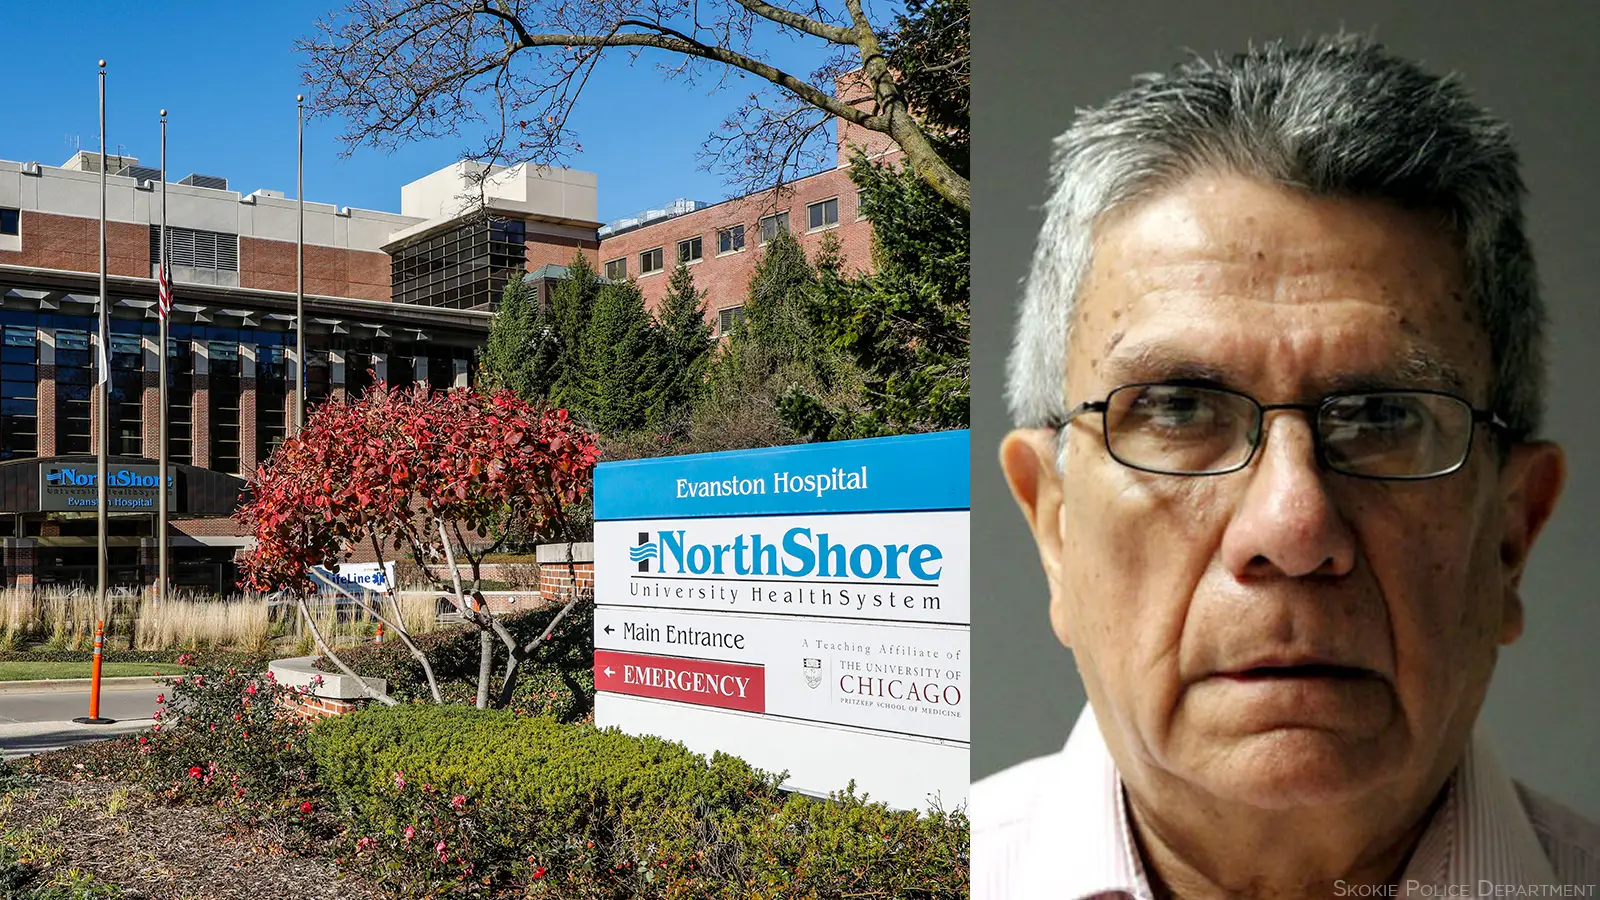 Jane Doe 32 alleges sexual assault by Gynecologist Fabio Ortega, NorthShore University HealthSystem